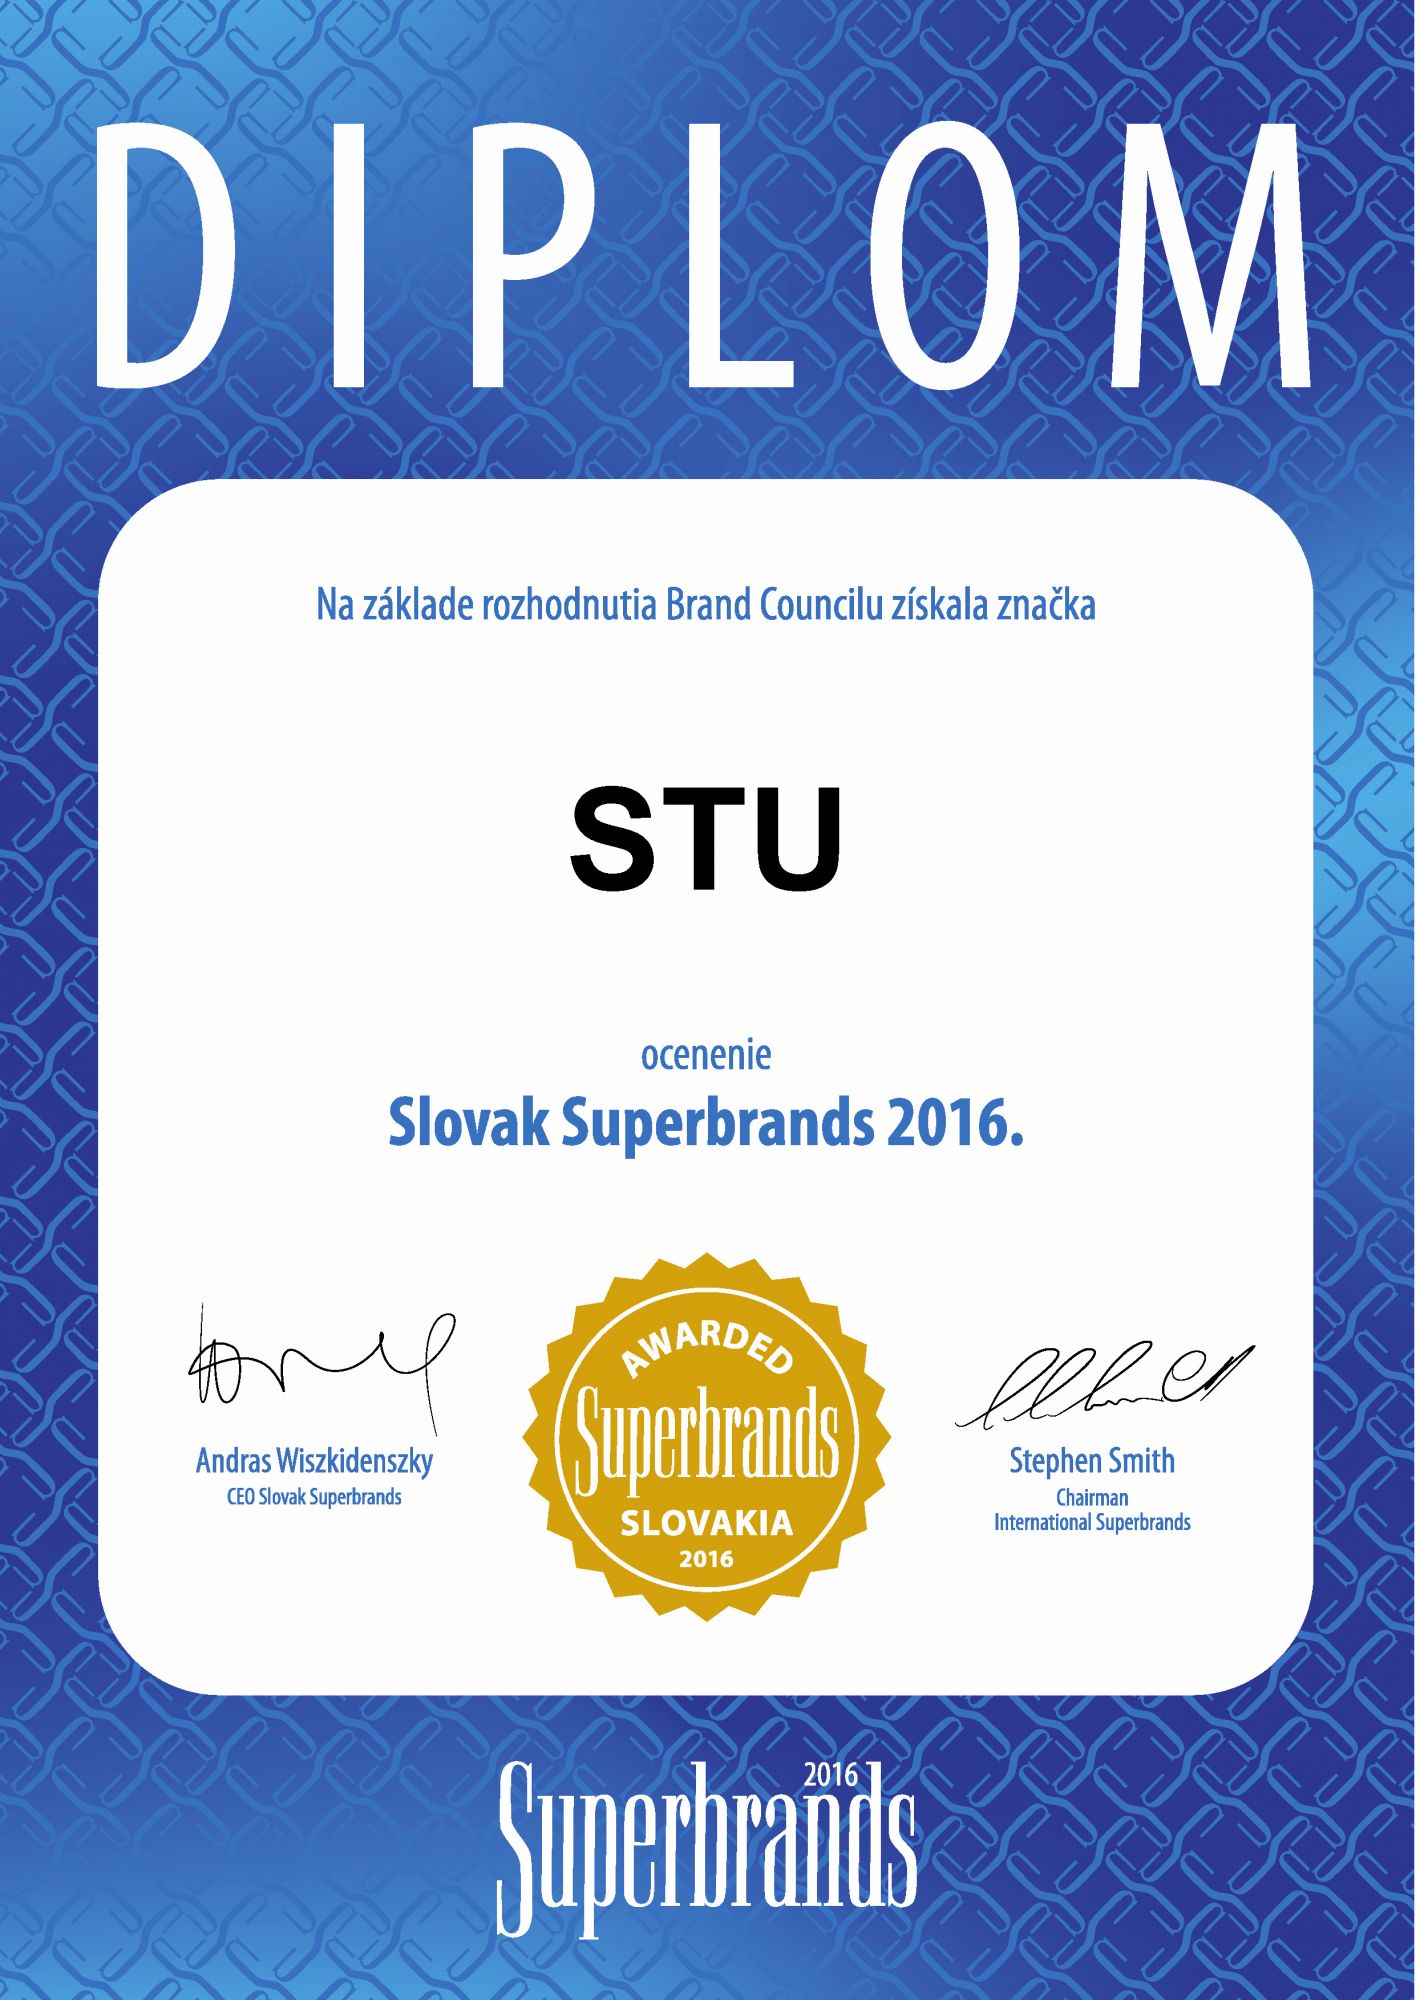 Superbrands award certifikat